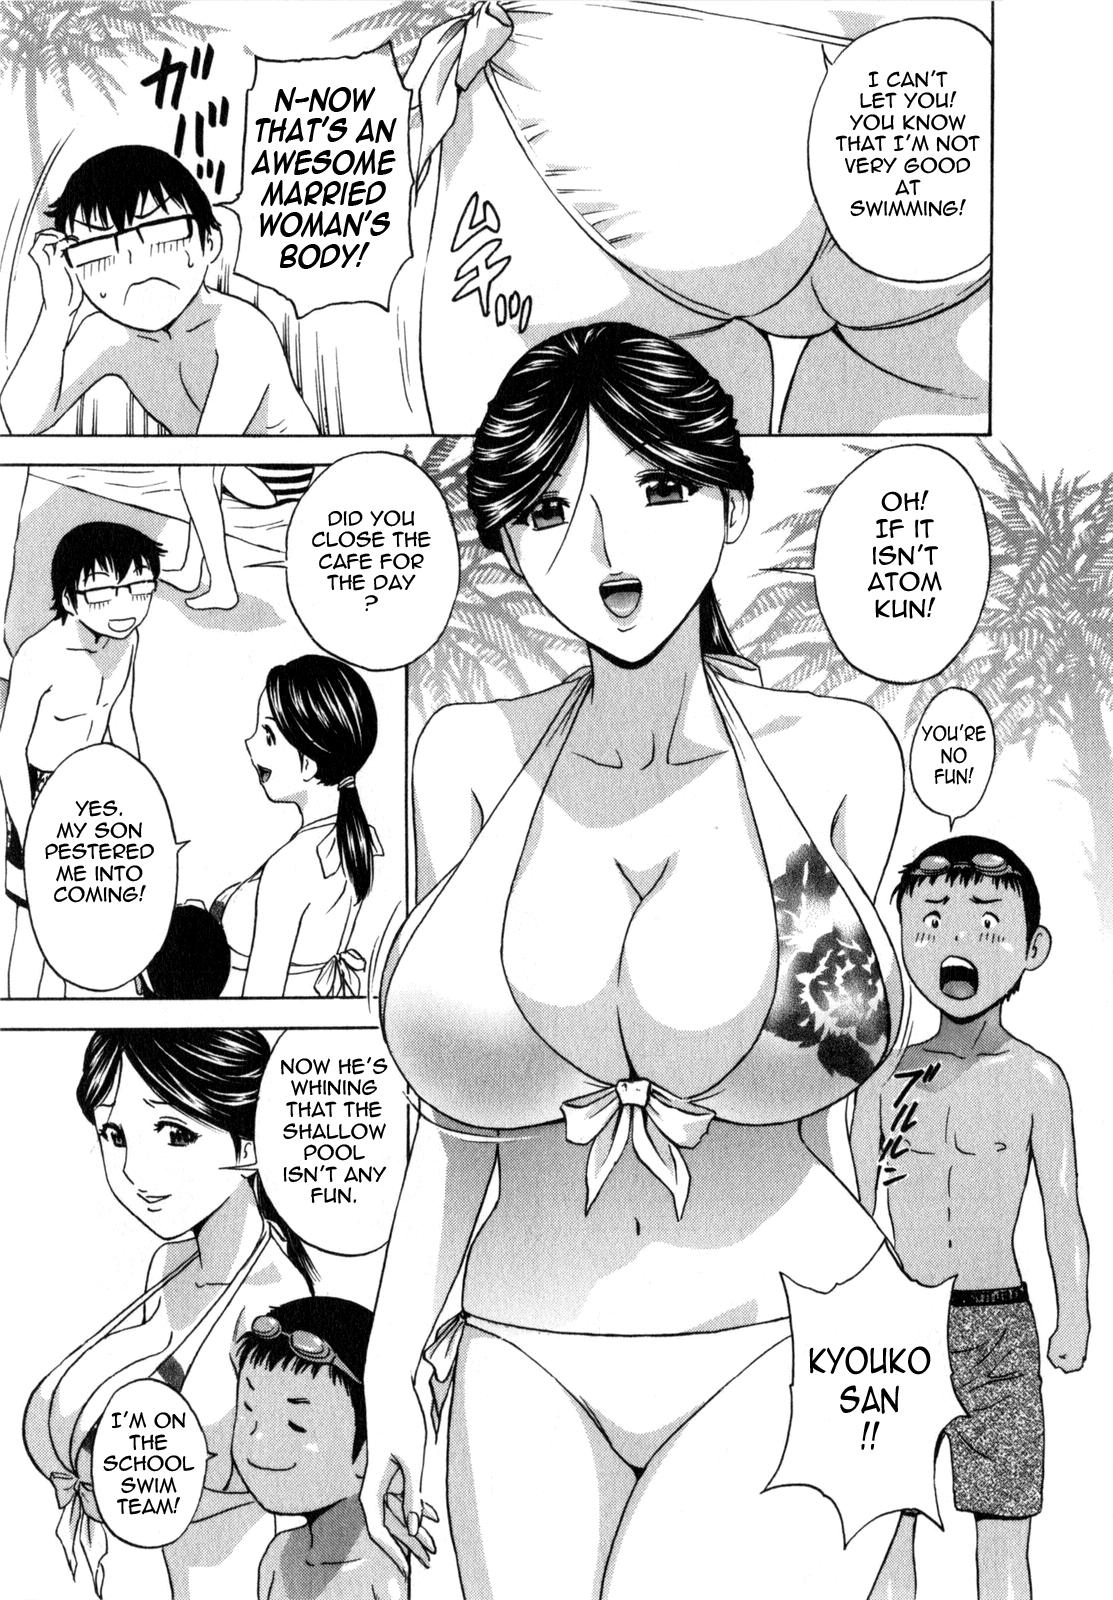 [Hidemaru] Life with Married Women Just Like a Manga 1 - Ch. 1-9 [English] {Tadanohito} 127